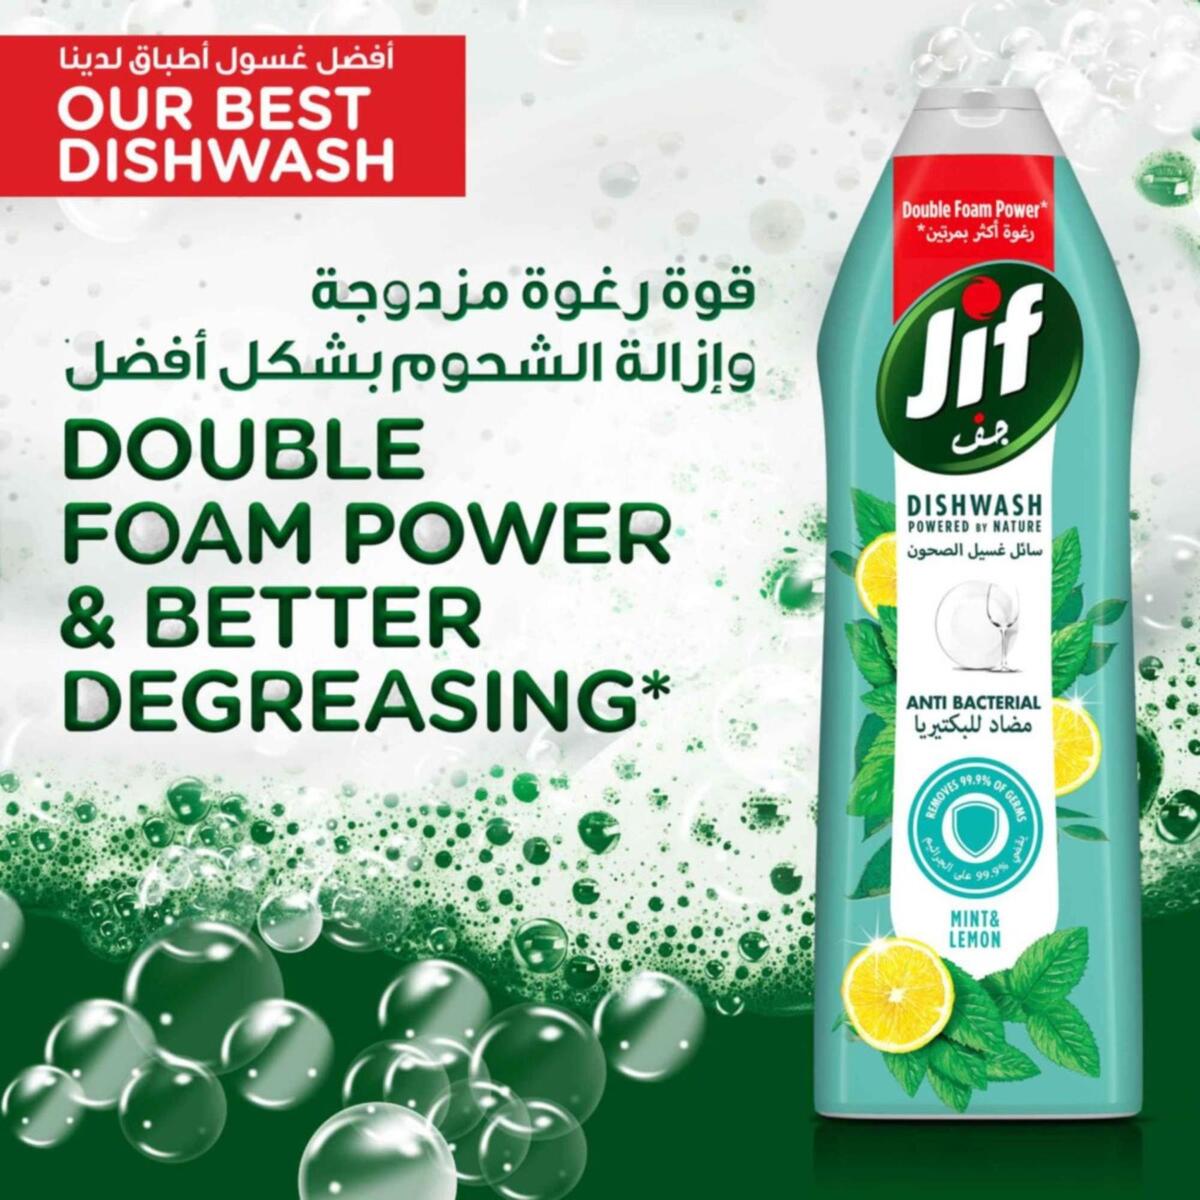 Jif Anti-Bacterial Dishwashing Liquid with Mint & Lemon 2 x 670 ml + Offer